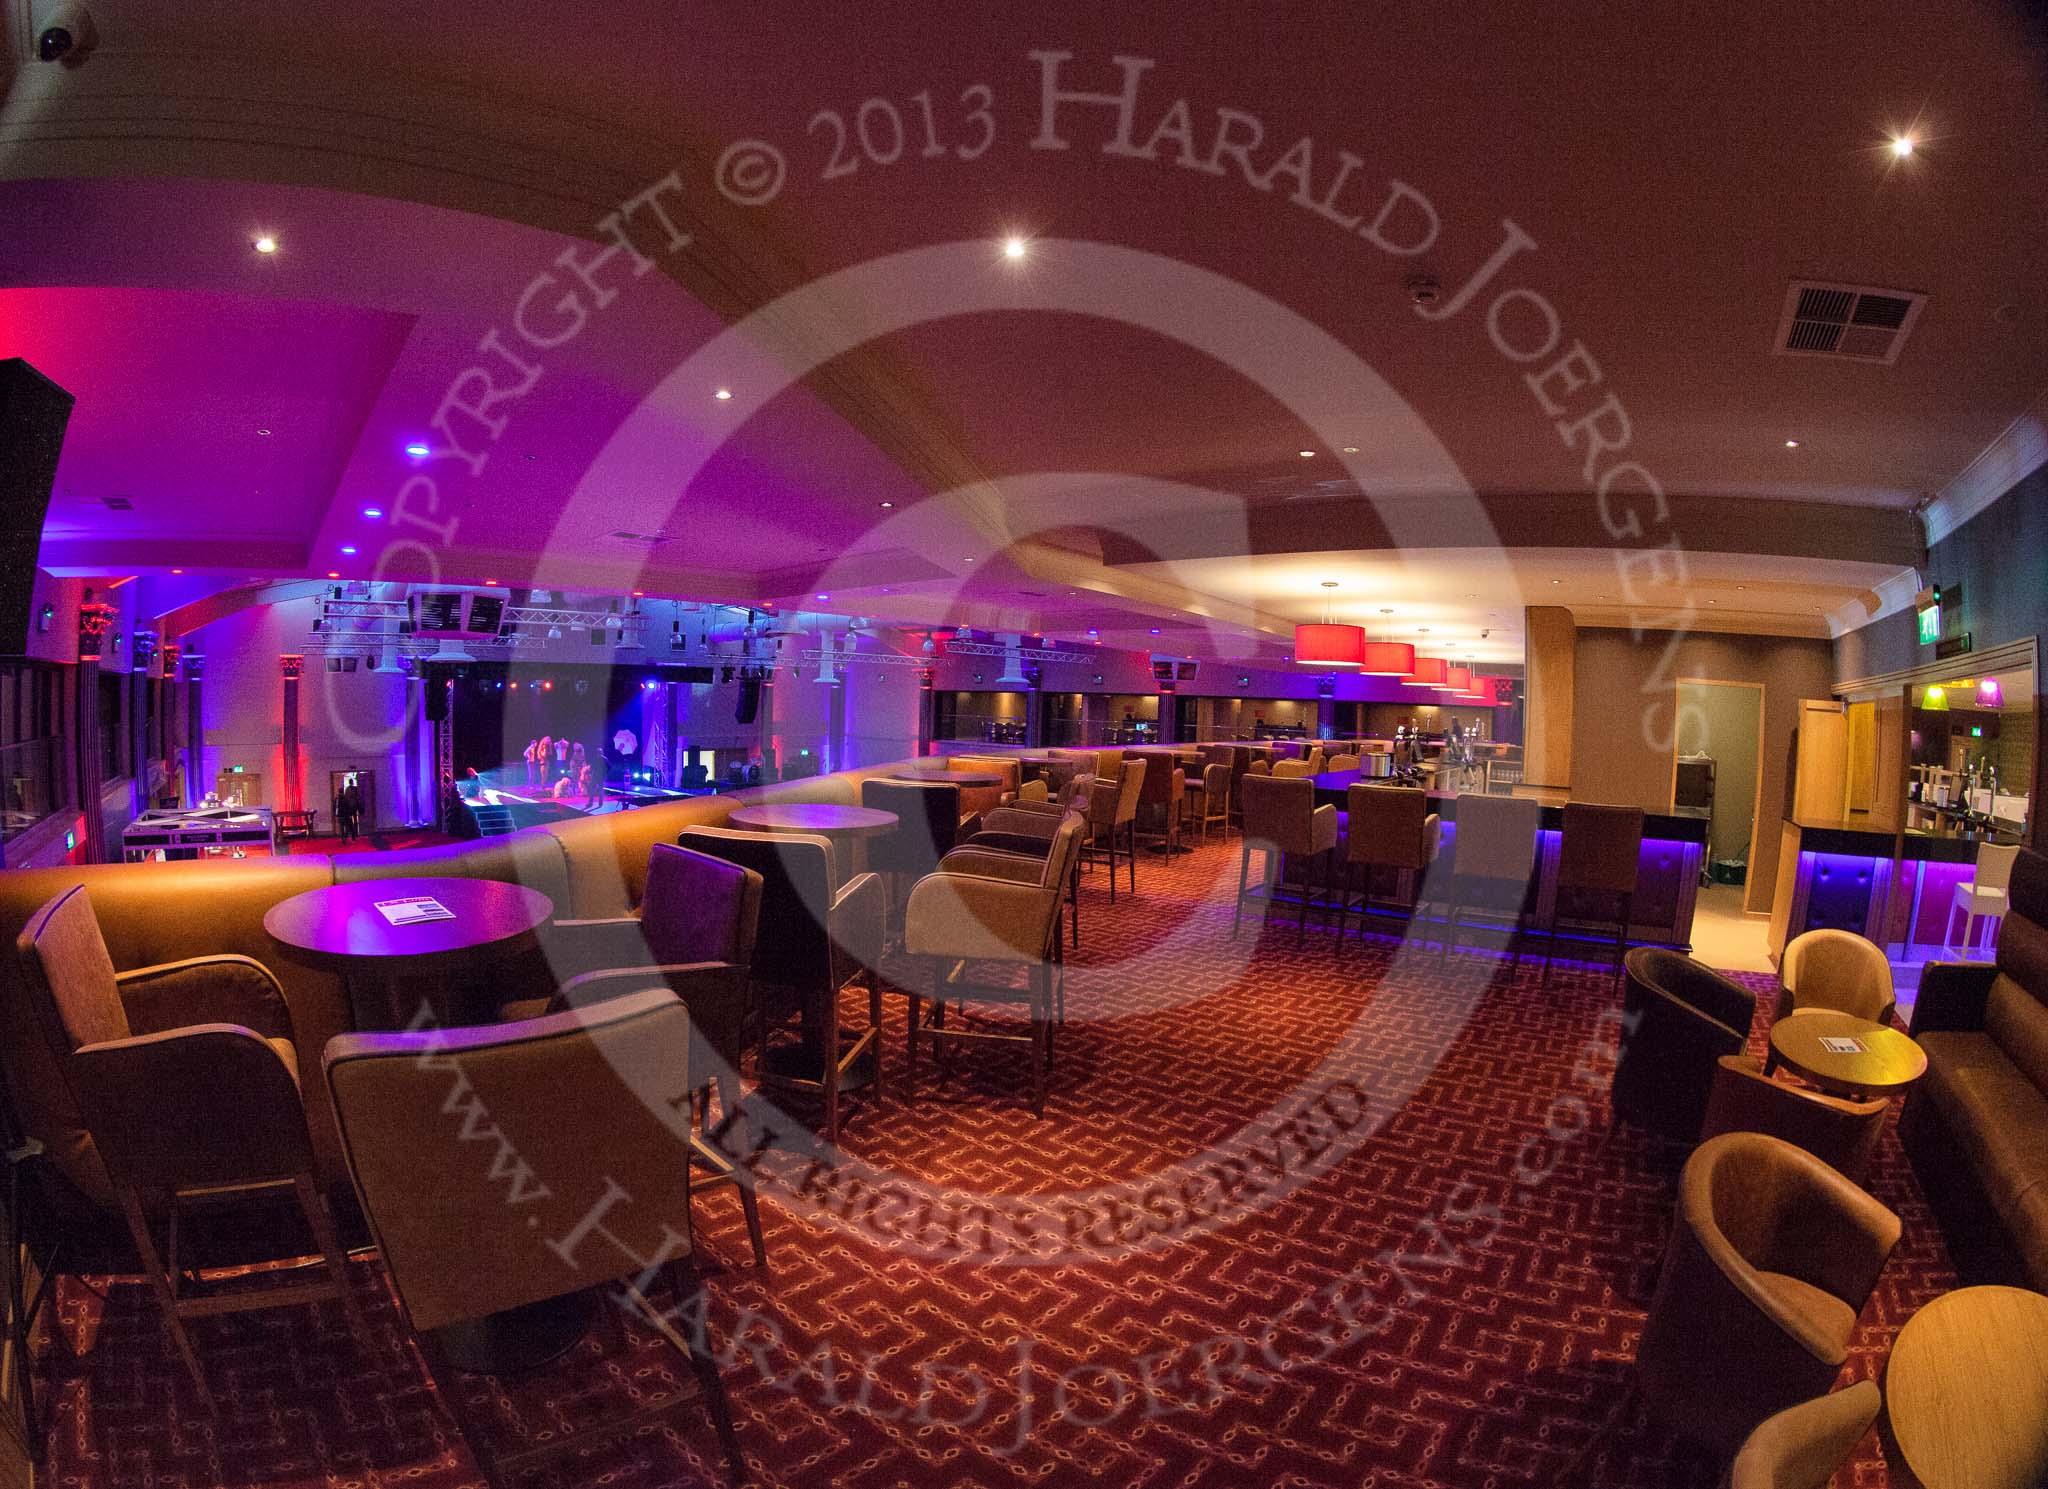 Grand Opening of the DBPC IXL Event Centre.
Dallas Burston Polo Club, Stoneythorpe Estate,
Southam,
Warwickshire,
United Kingdom,
on 05 December 2013 at 15:57, image #23